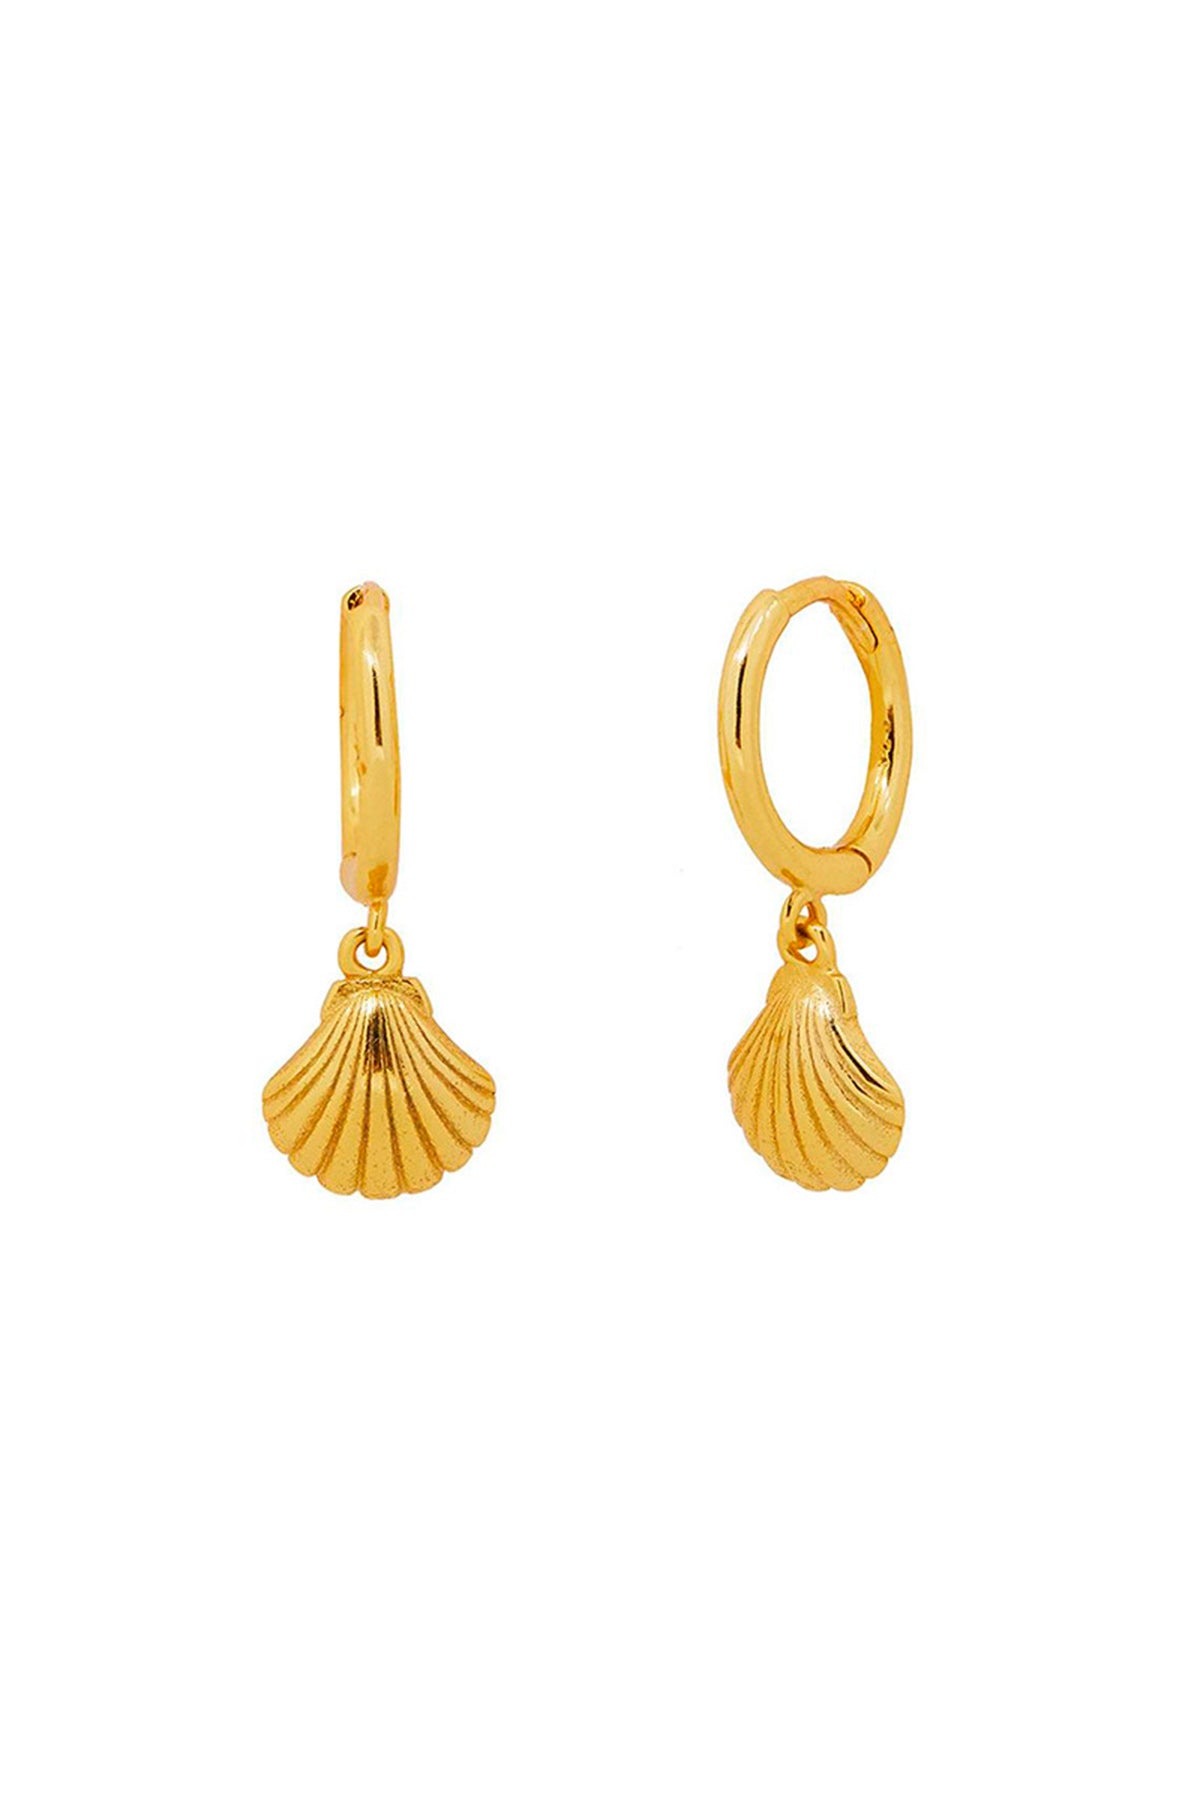 CRAS Jewellery BedfordCras Earring Jewellery 18K Gold Plated